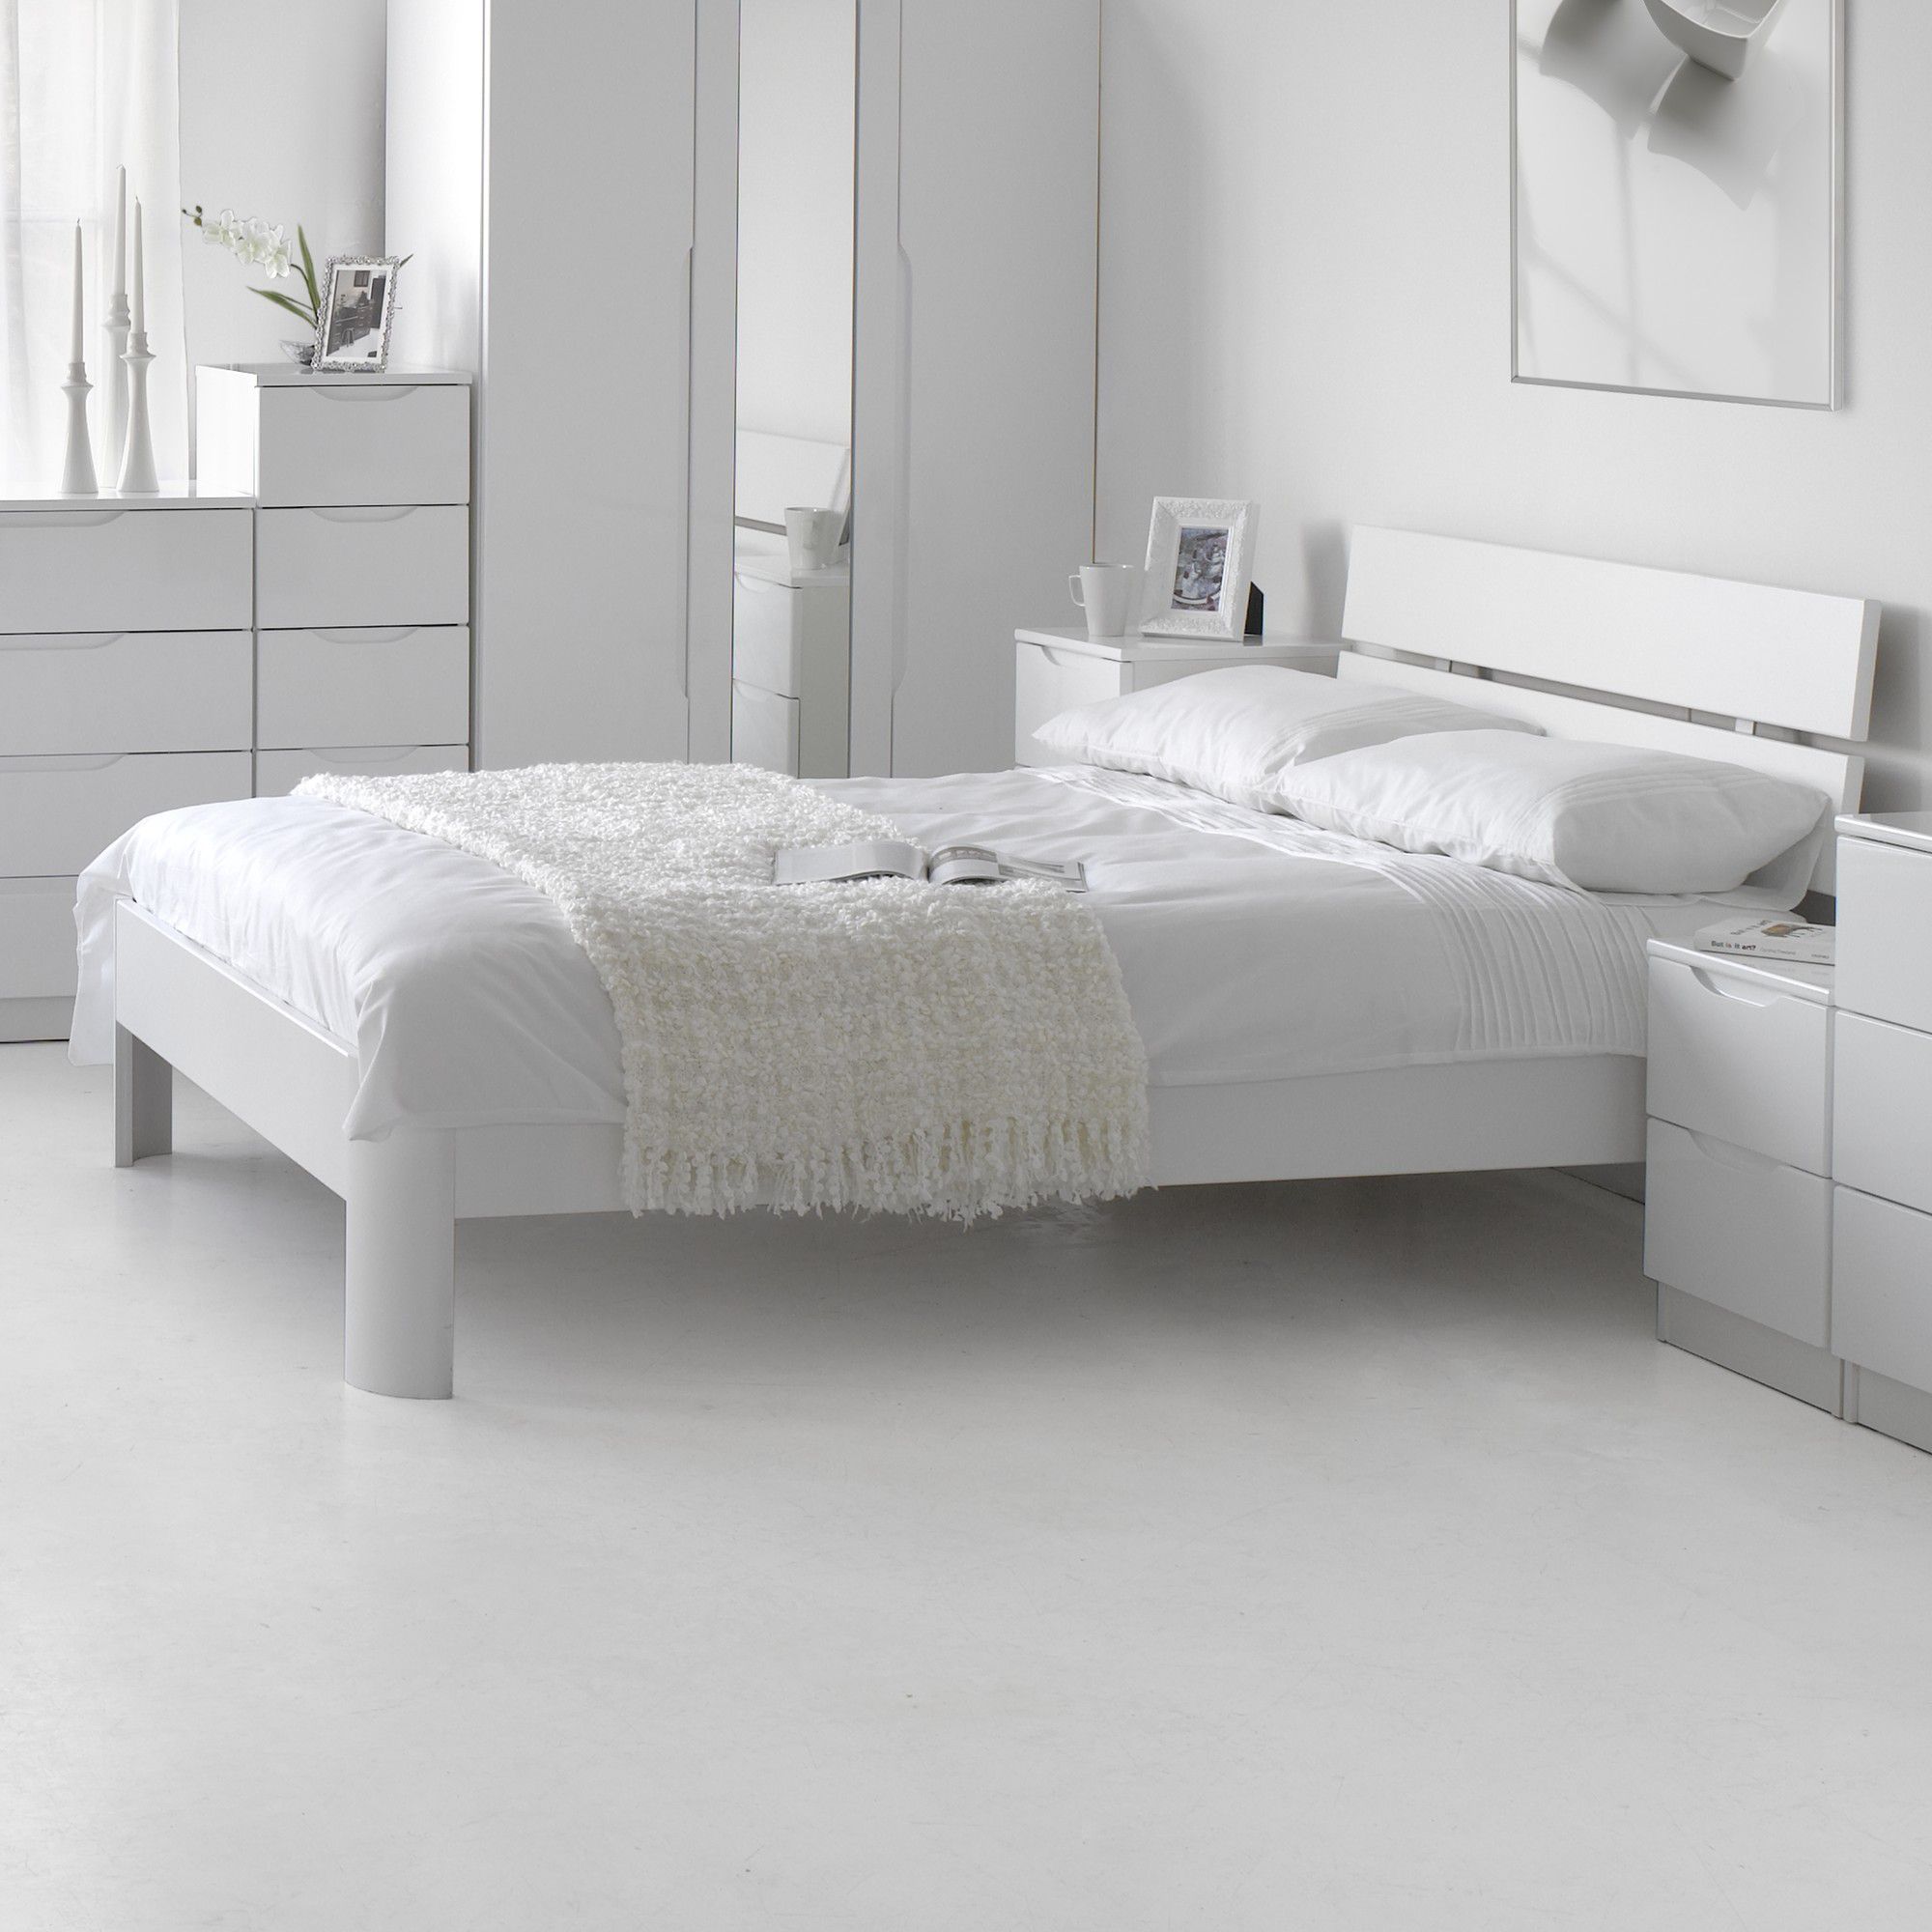 Alto Furniture Visualise Alpine Bed Frame - King at Tesco Direct